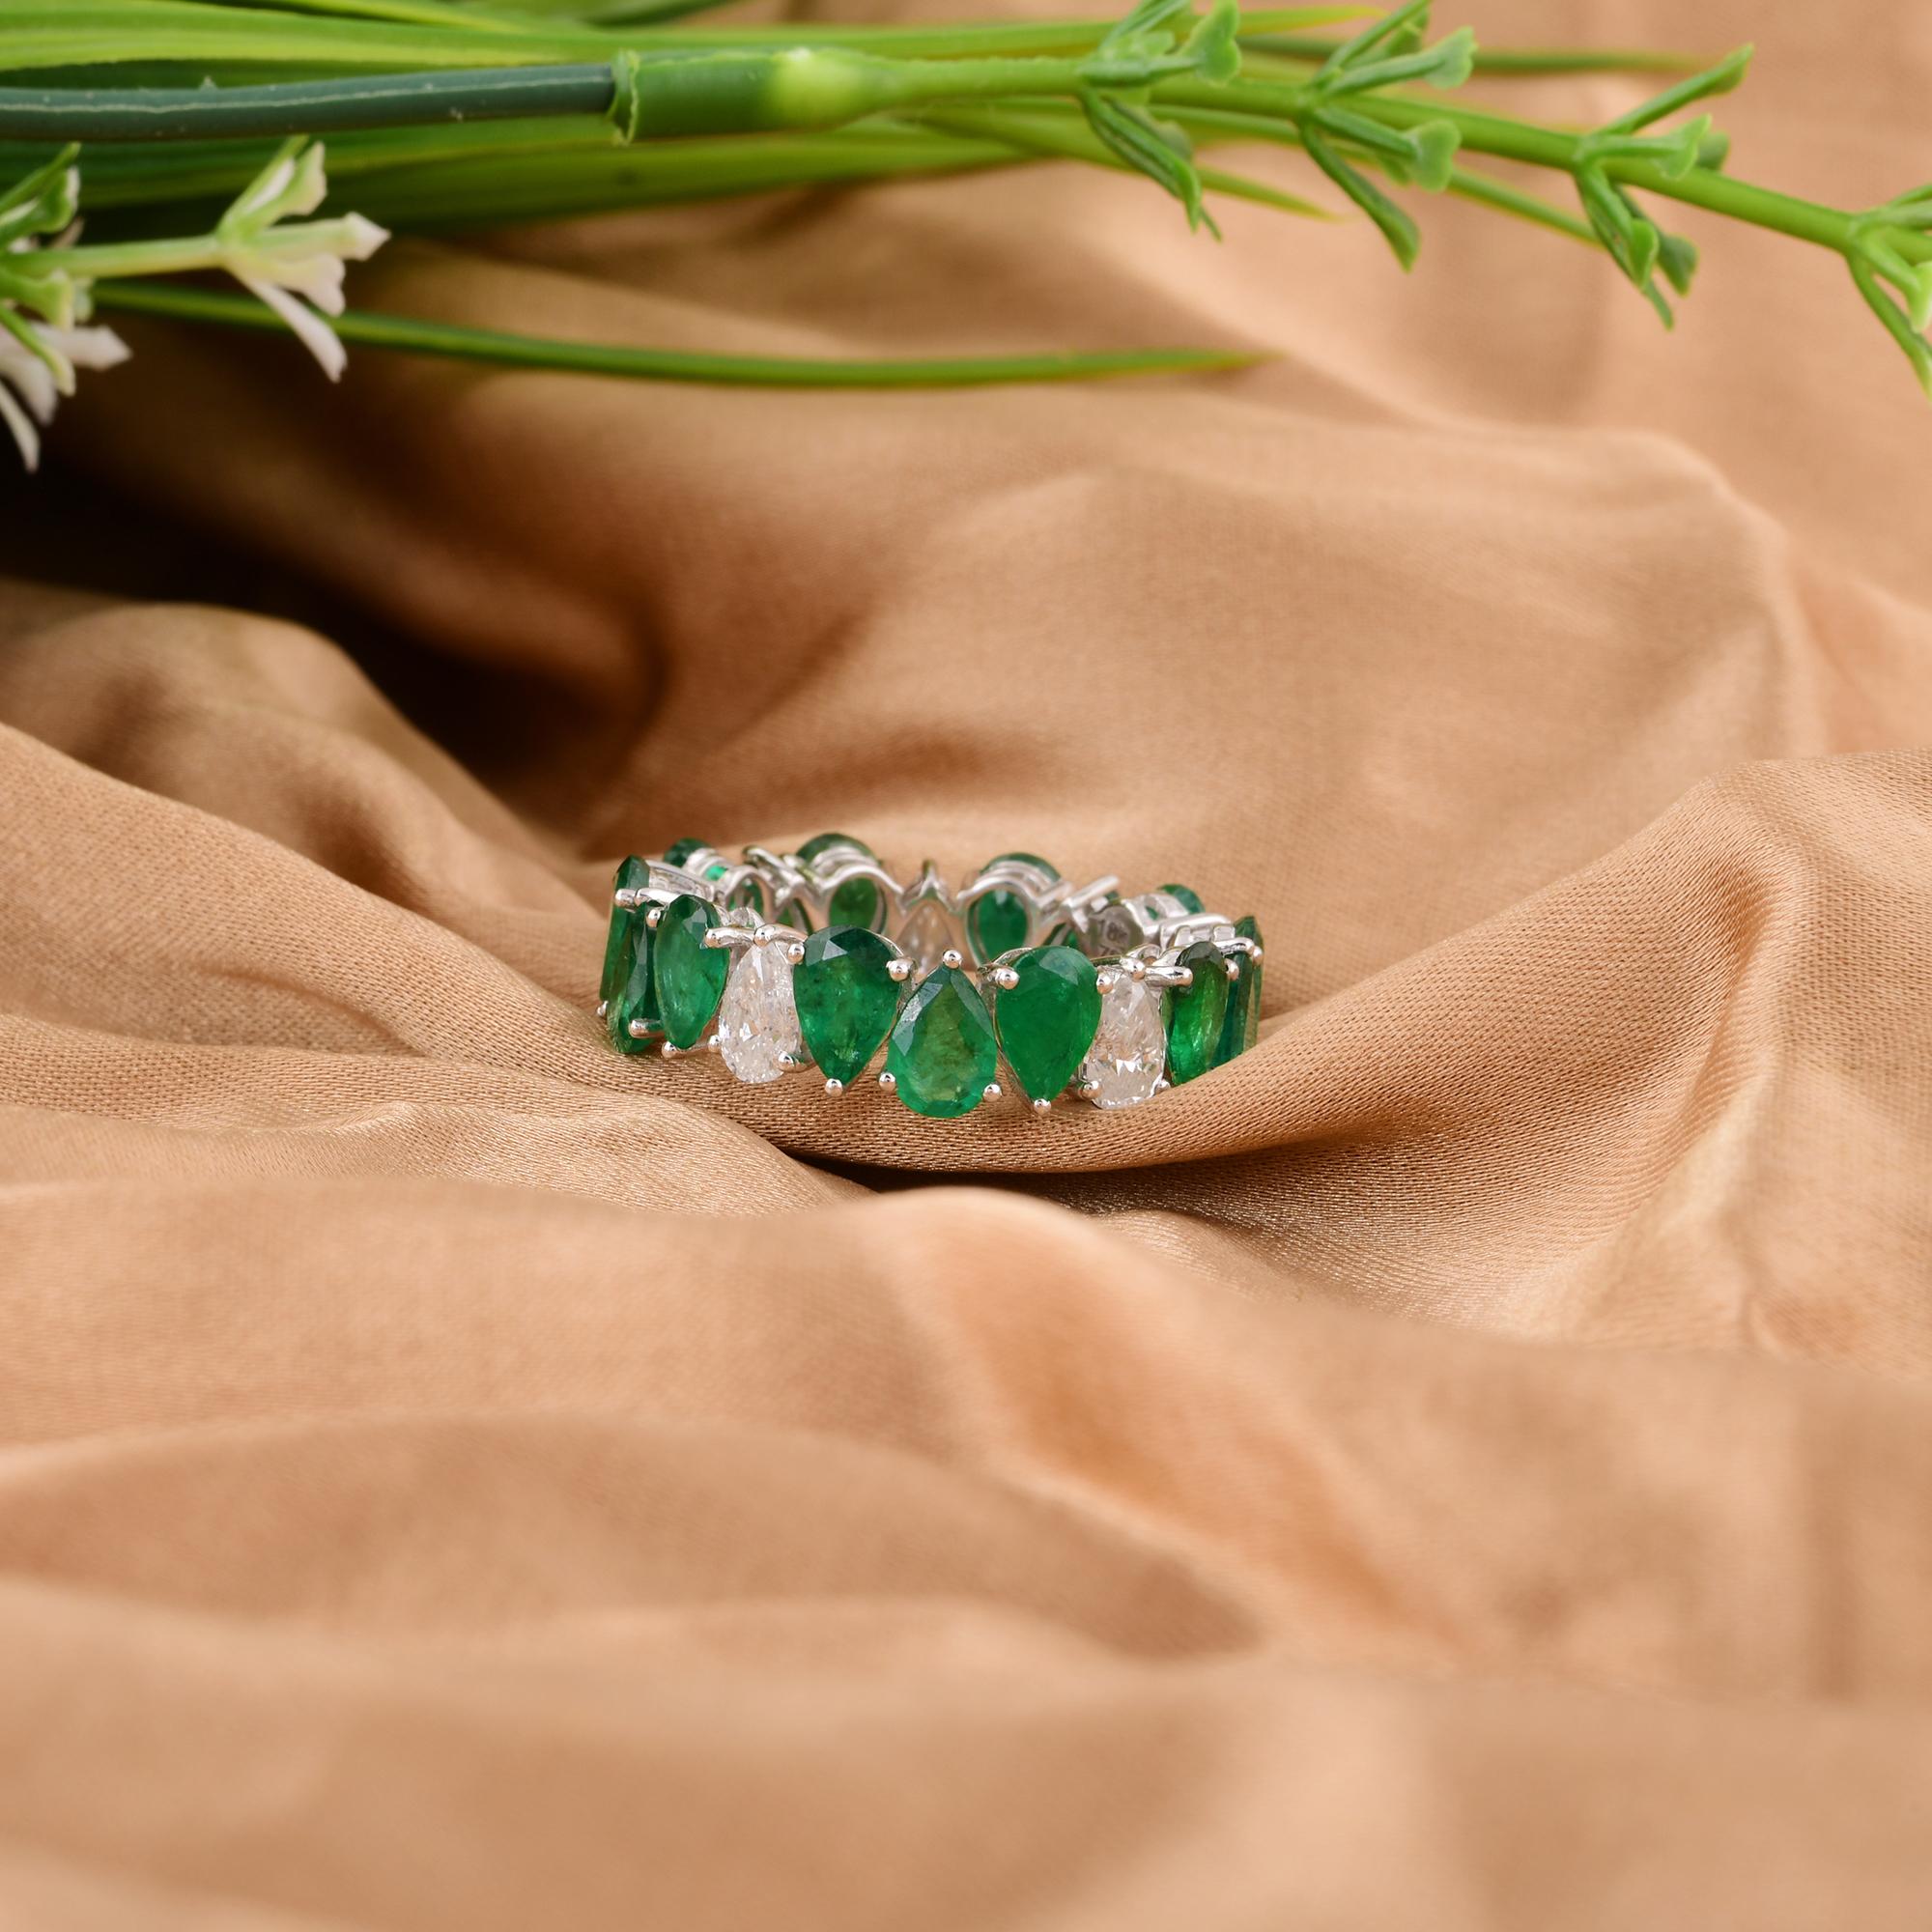 Pear Cut Pear Emerald Gemstone Band Ring Diamond 18 Karat White Gold Handmade Jewelry For Sale